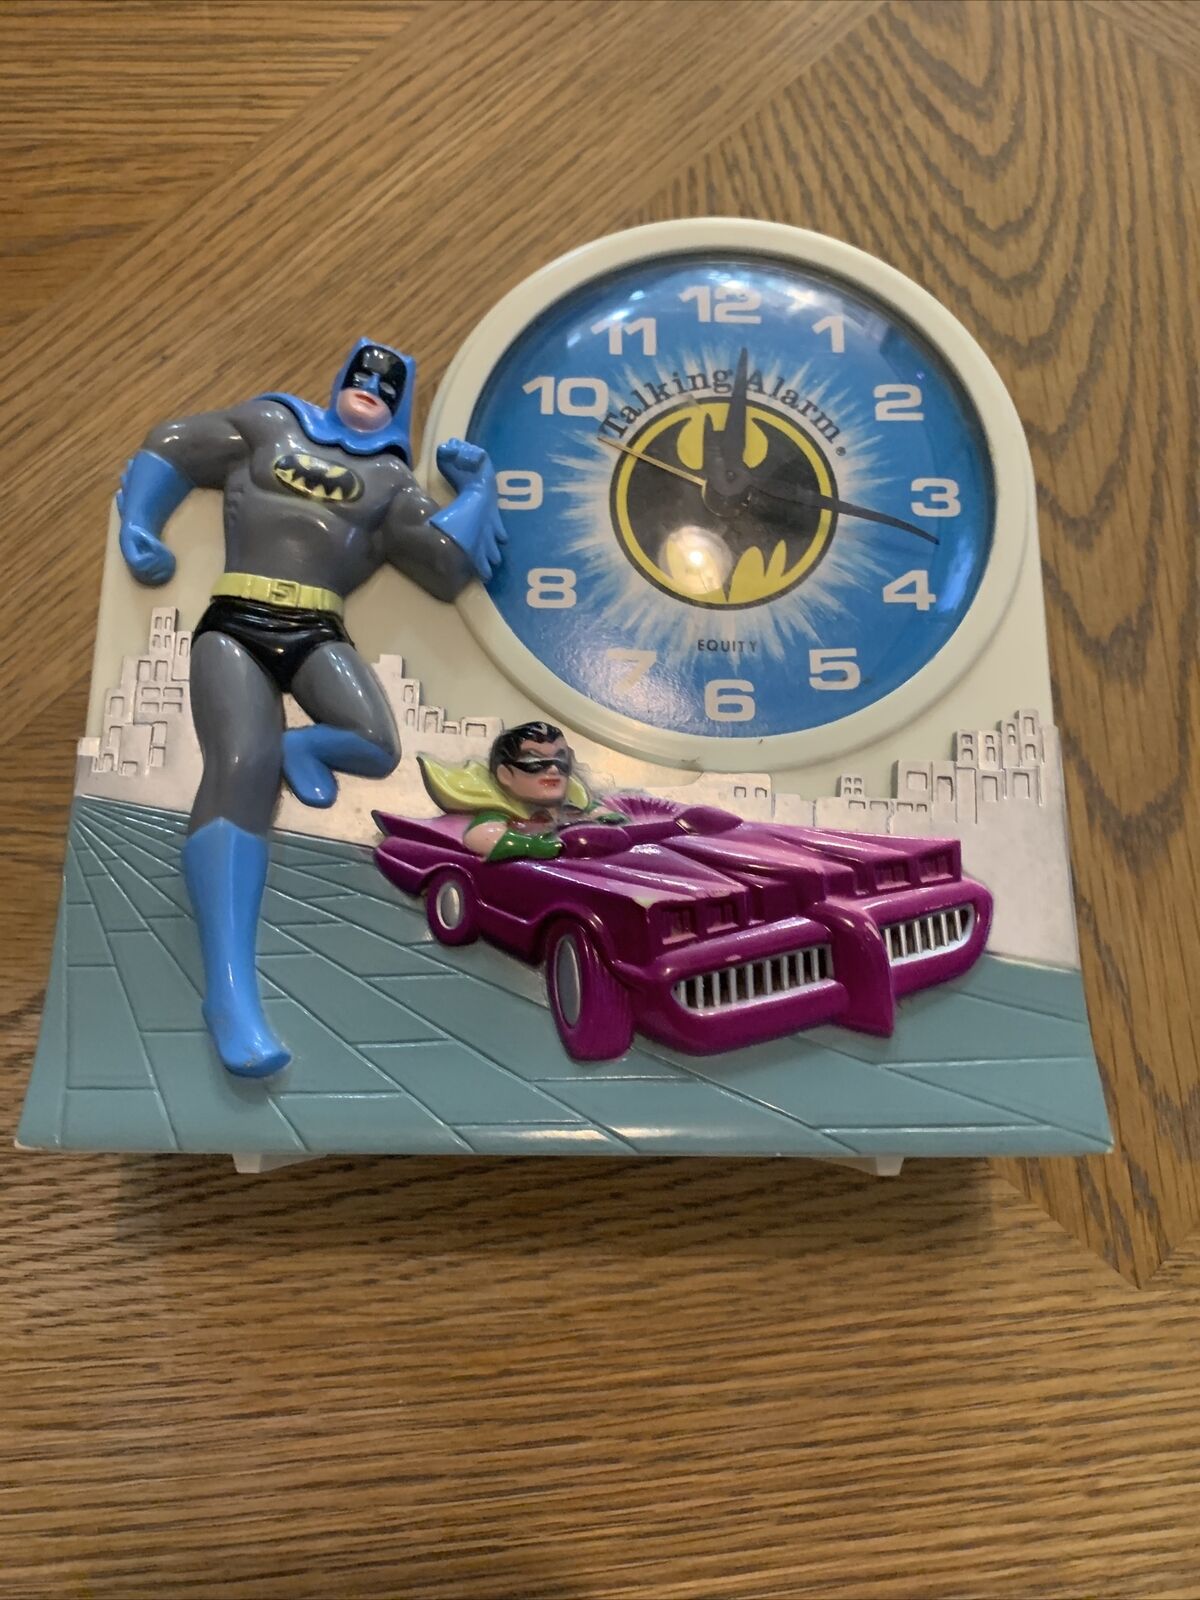 Batman & Robin Janex 1974 Talking Alarm Clock Missing Battery Door & Winding Key